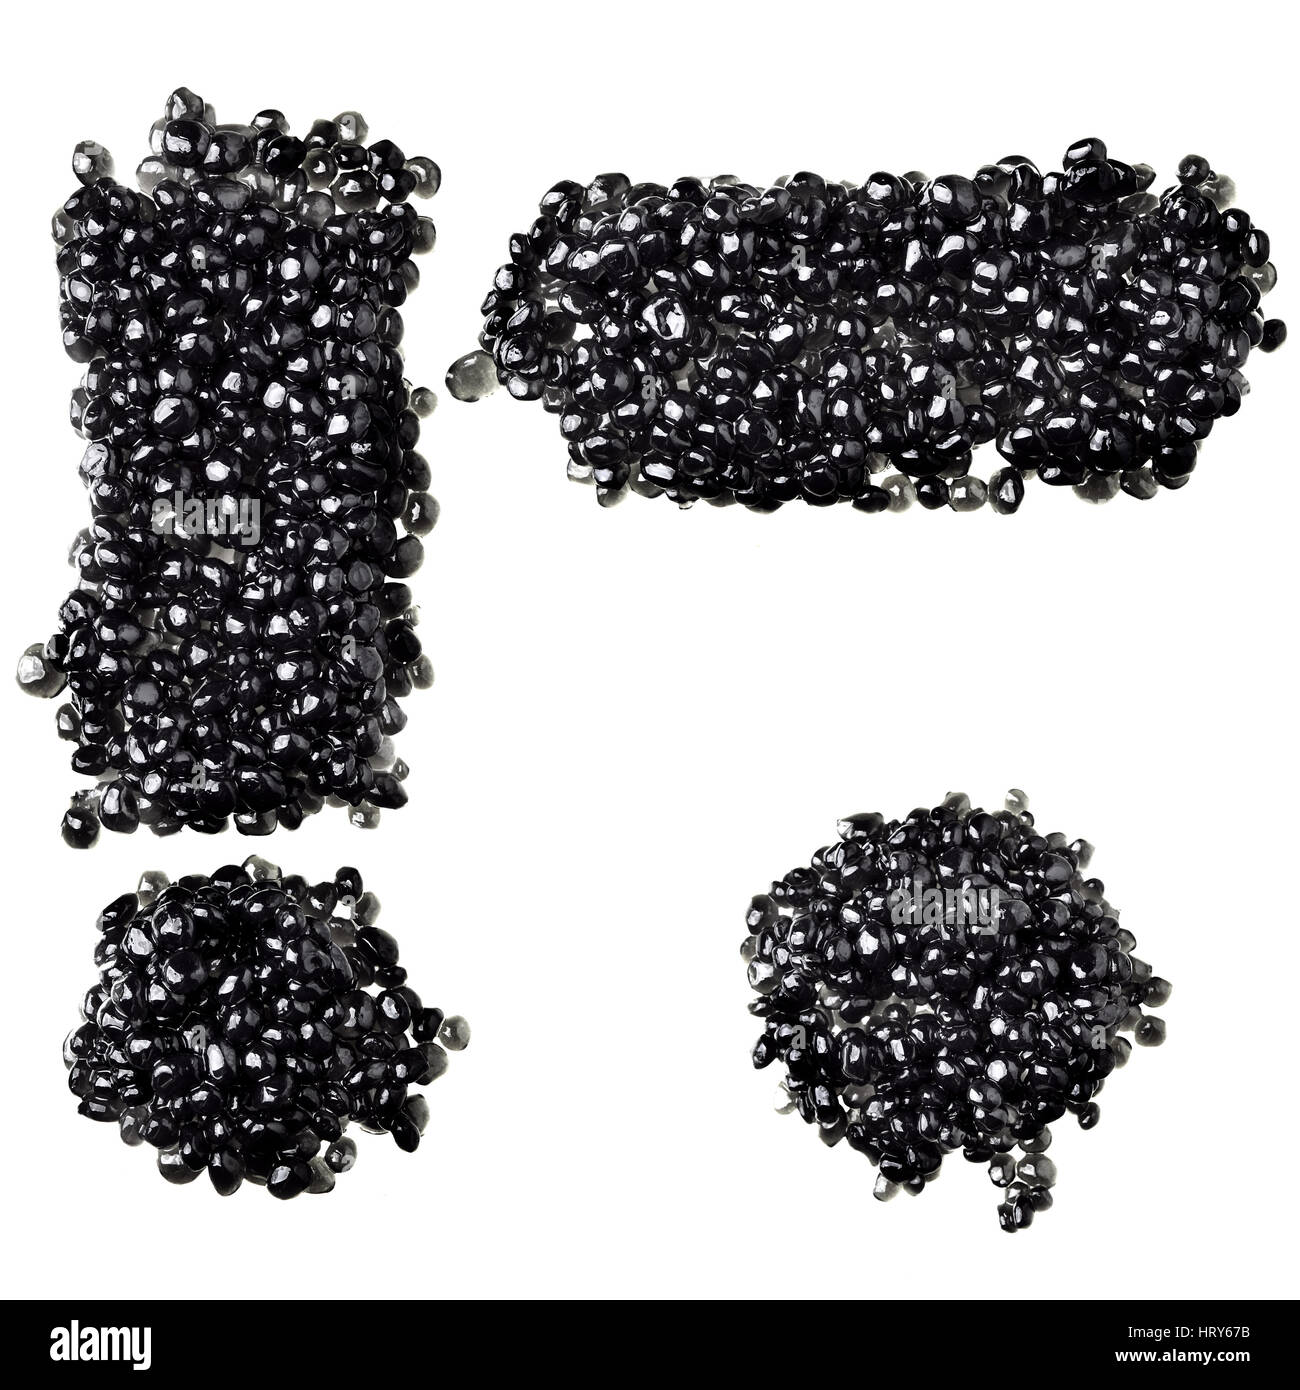 Marks - Alphabet made from black caviar Stock Photo